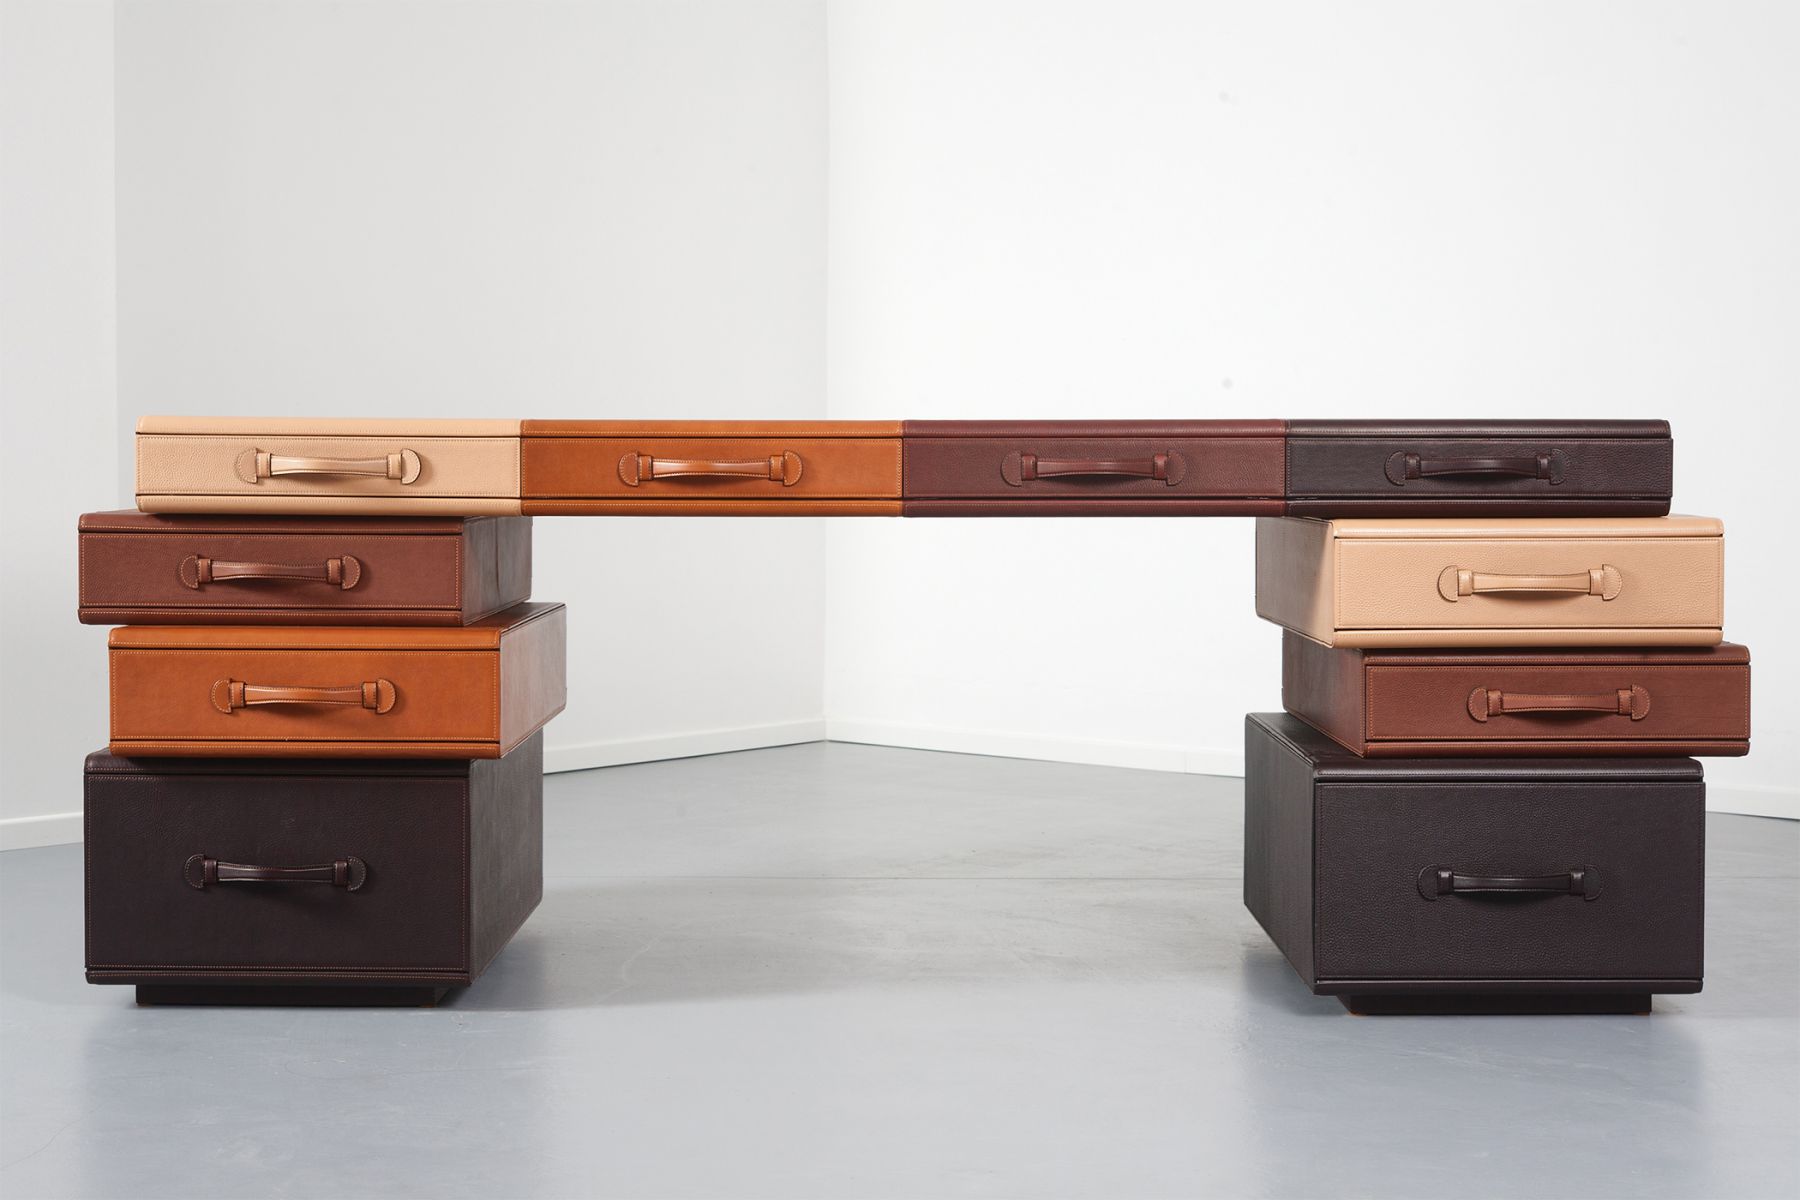 Scrivania 'Desk of briefcases' Maarten De Ceulaer pic-4